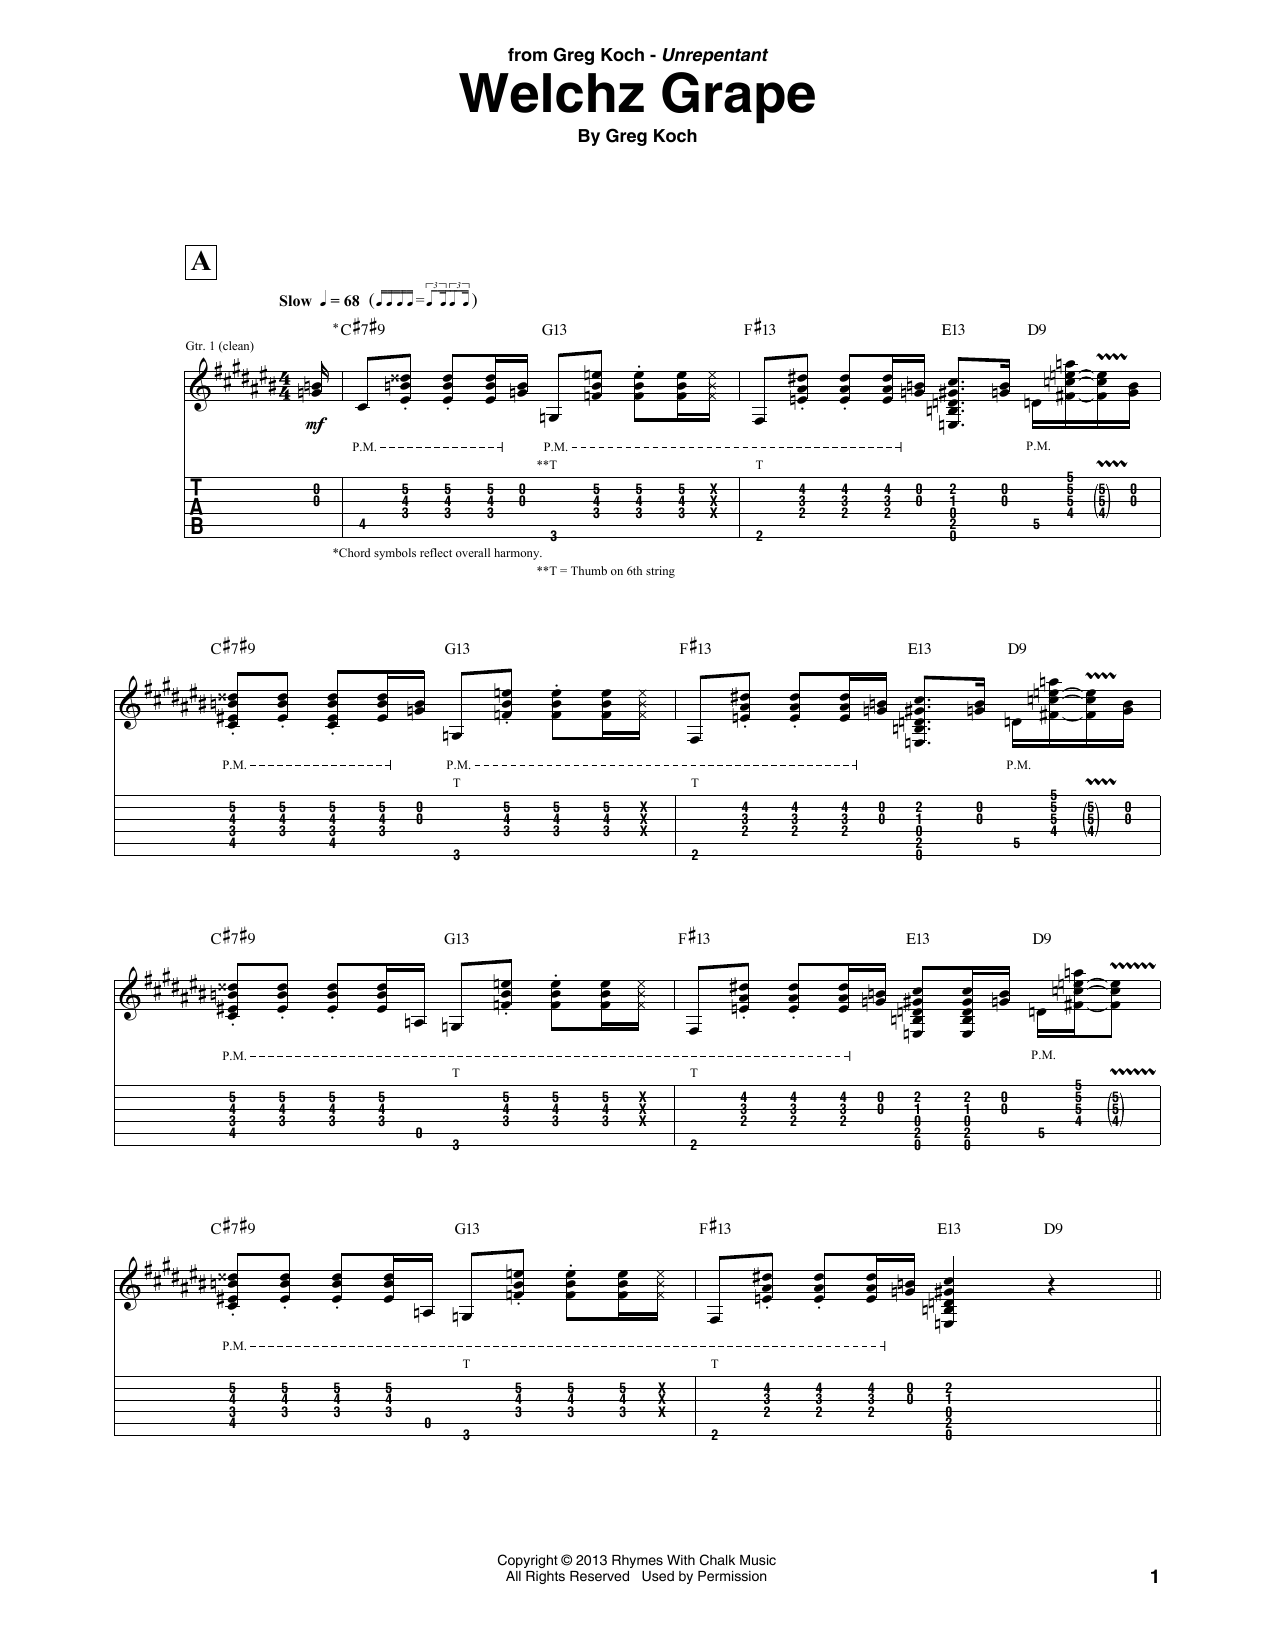 Greg Koch Welchz Grape Sheet Music Notes & Chords for Guitar Tab - Download or Print PDF